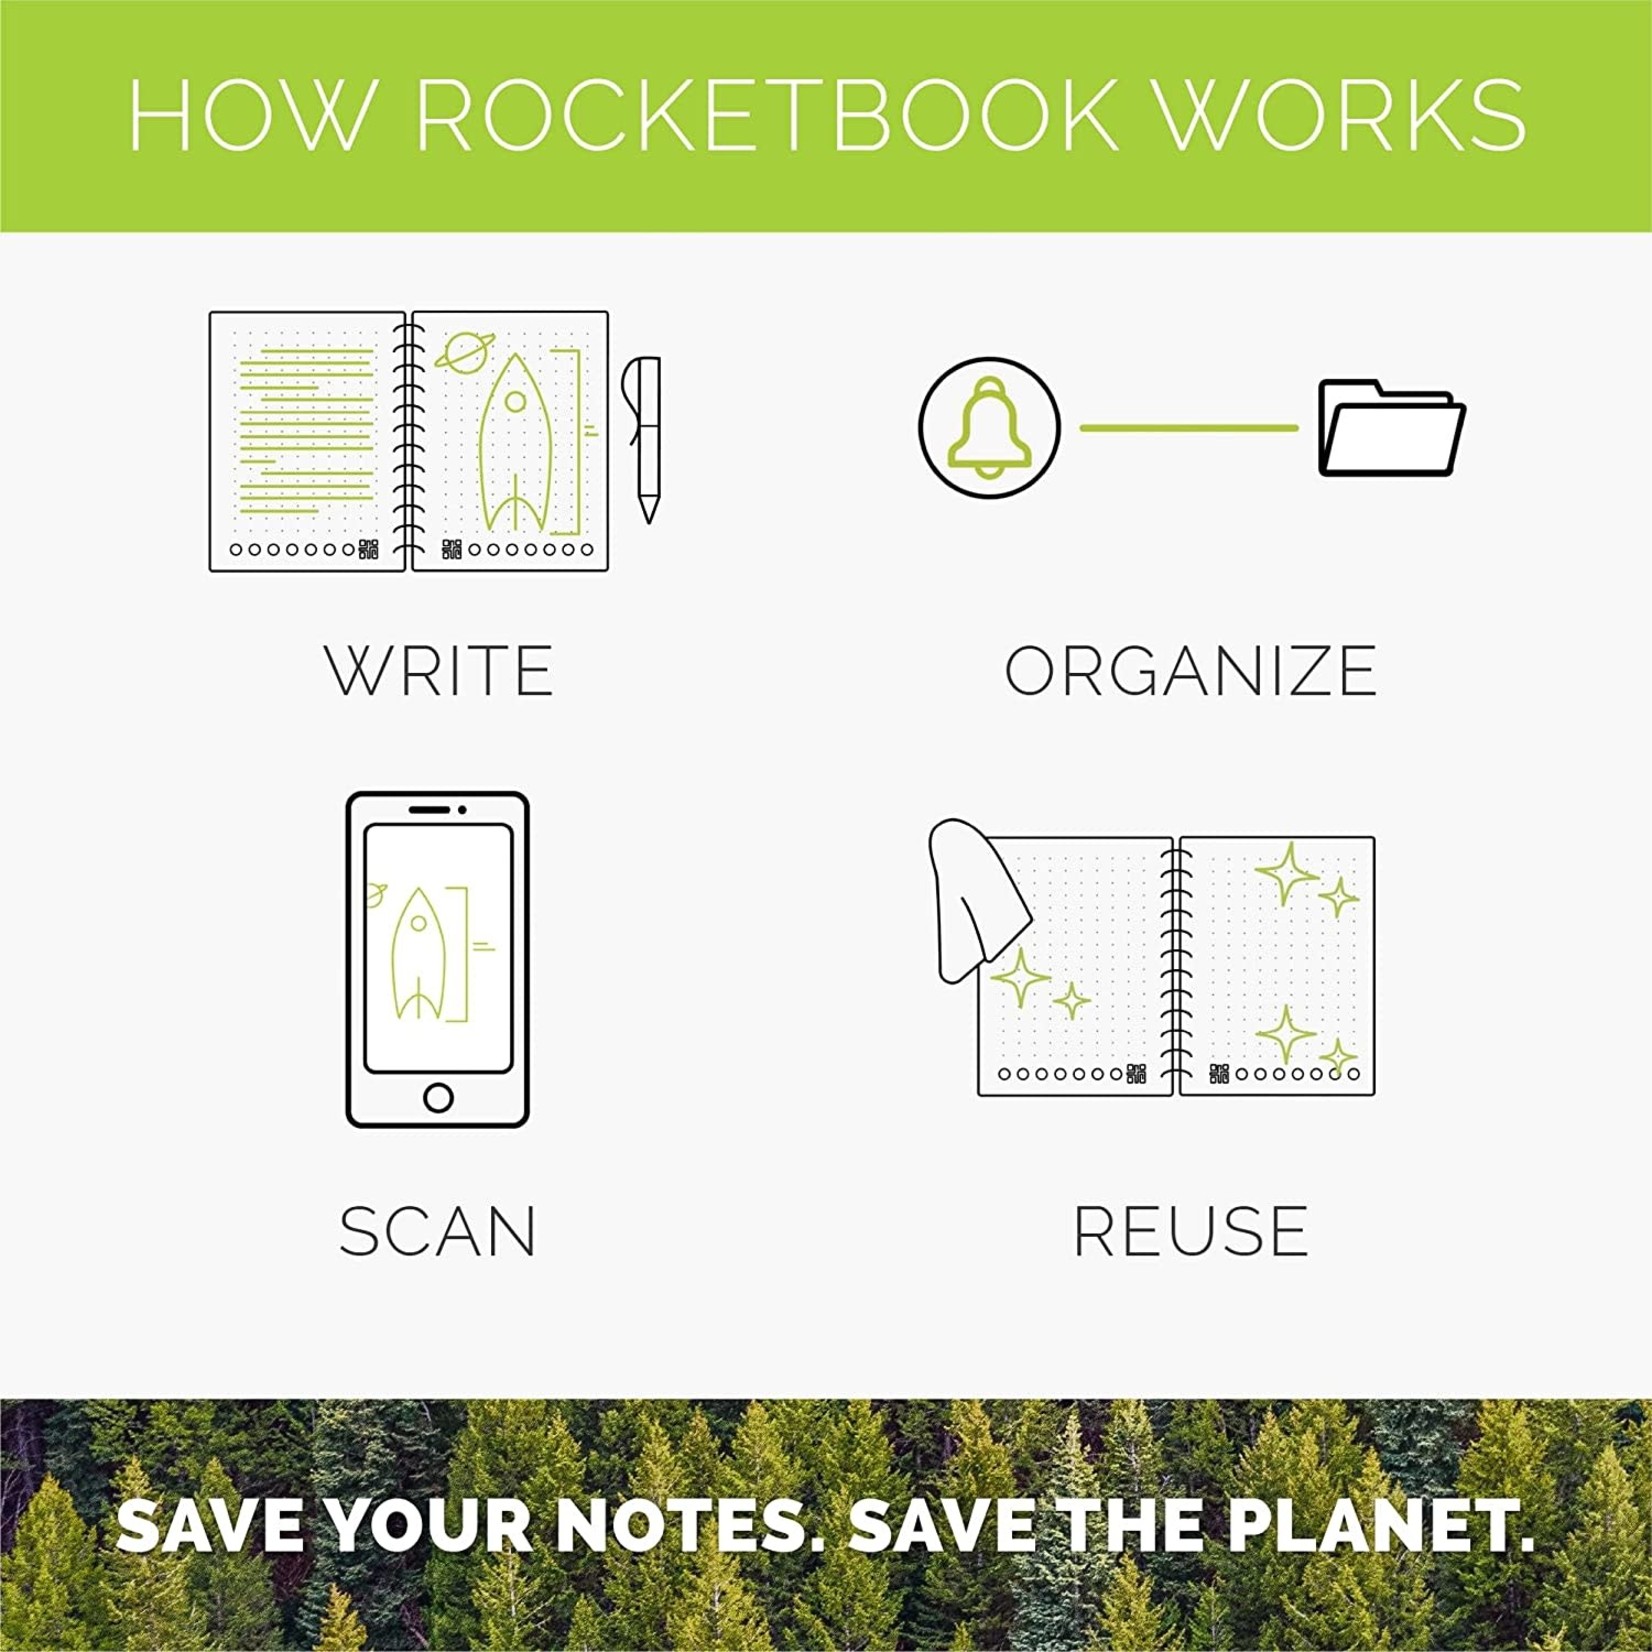 Rocketbook Multi-Subject Smart Notebook